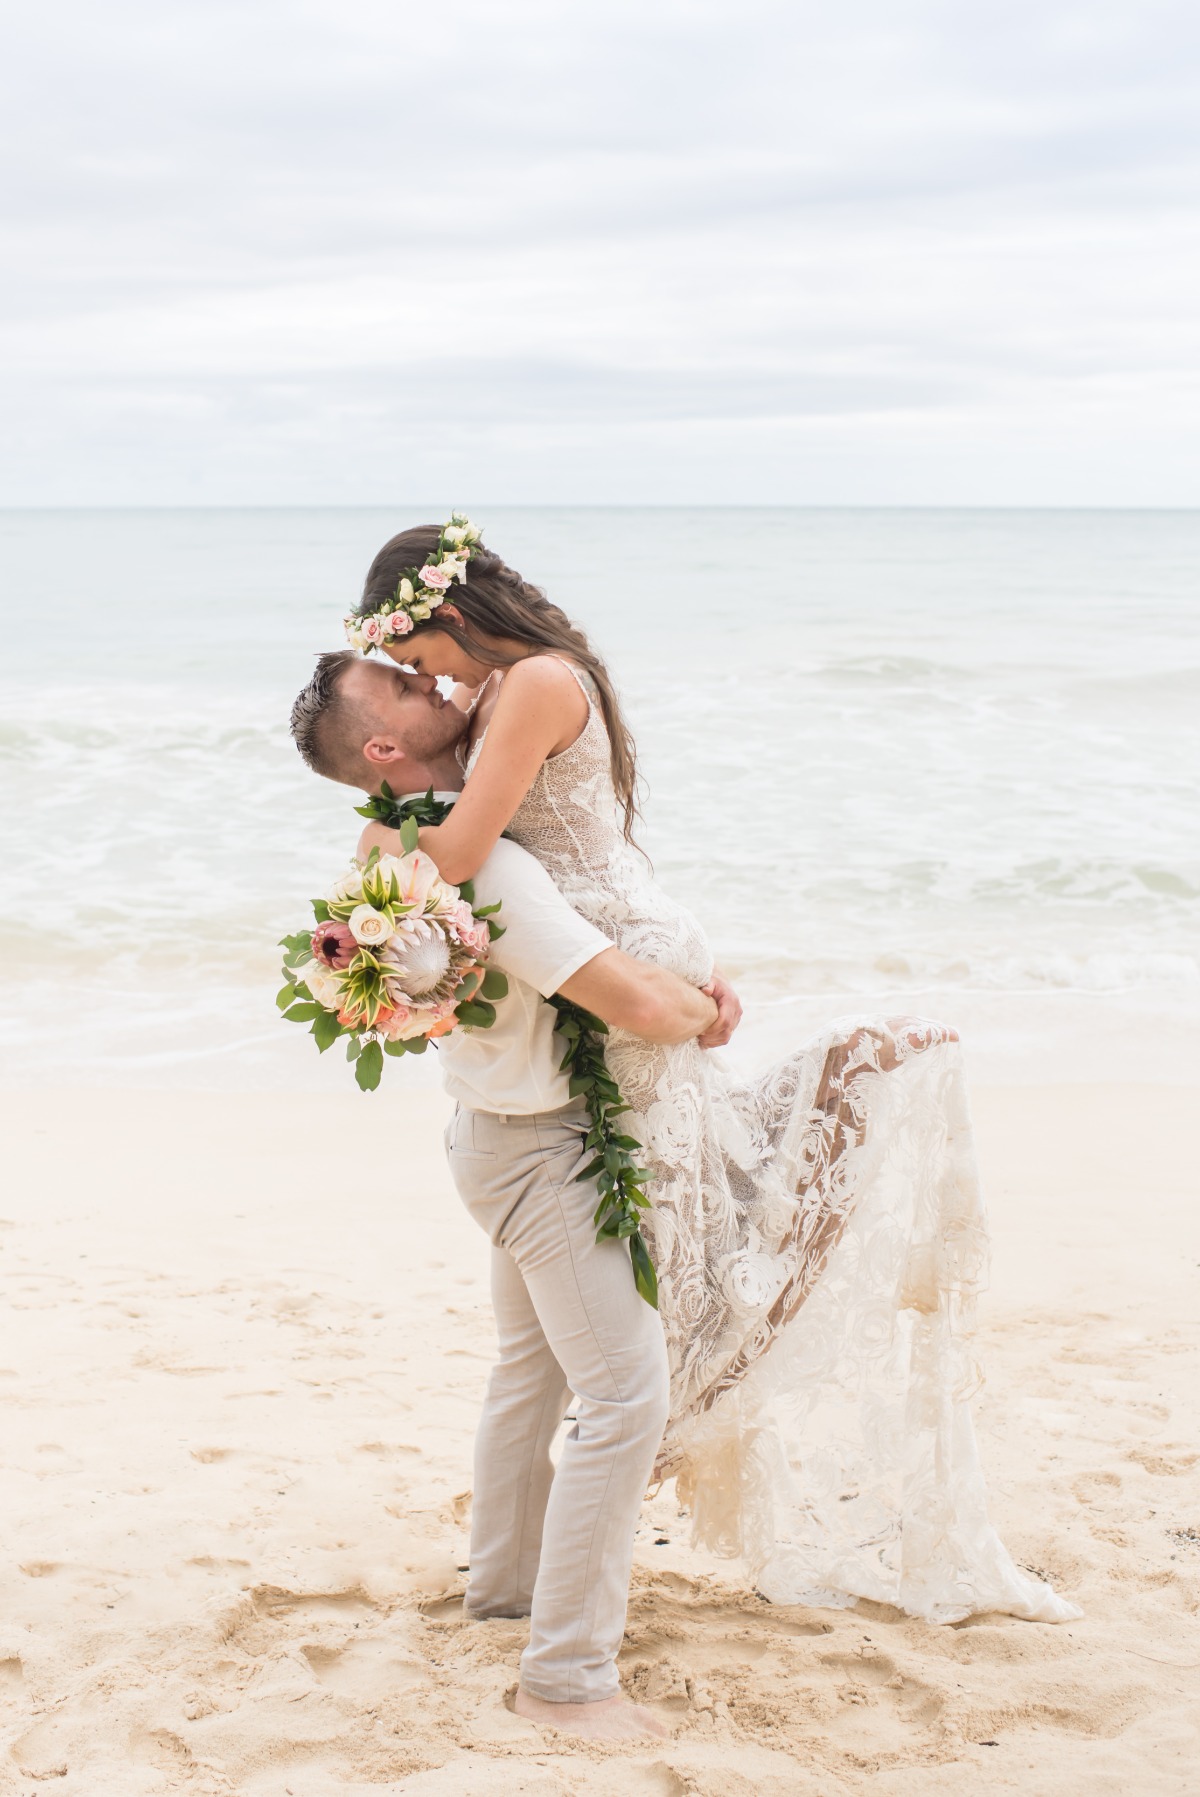 Romantic beach wedding in Oahu